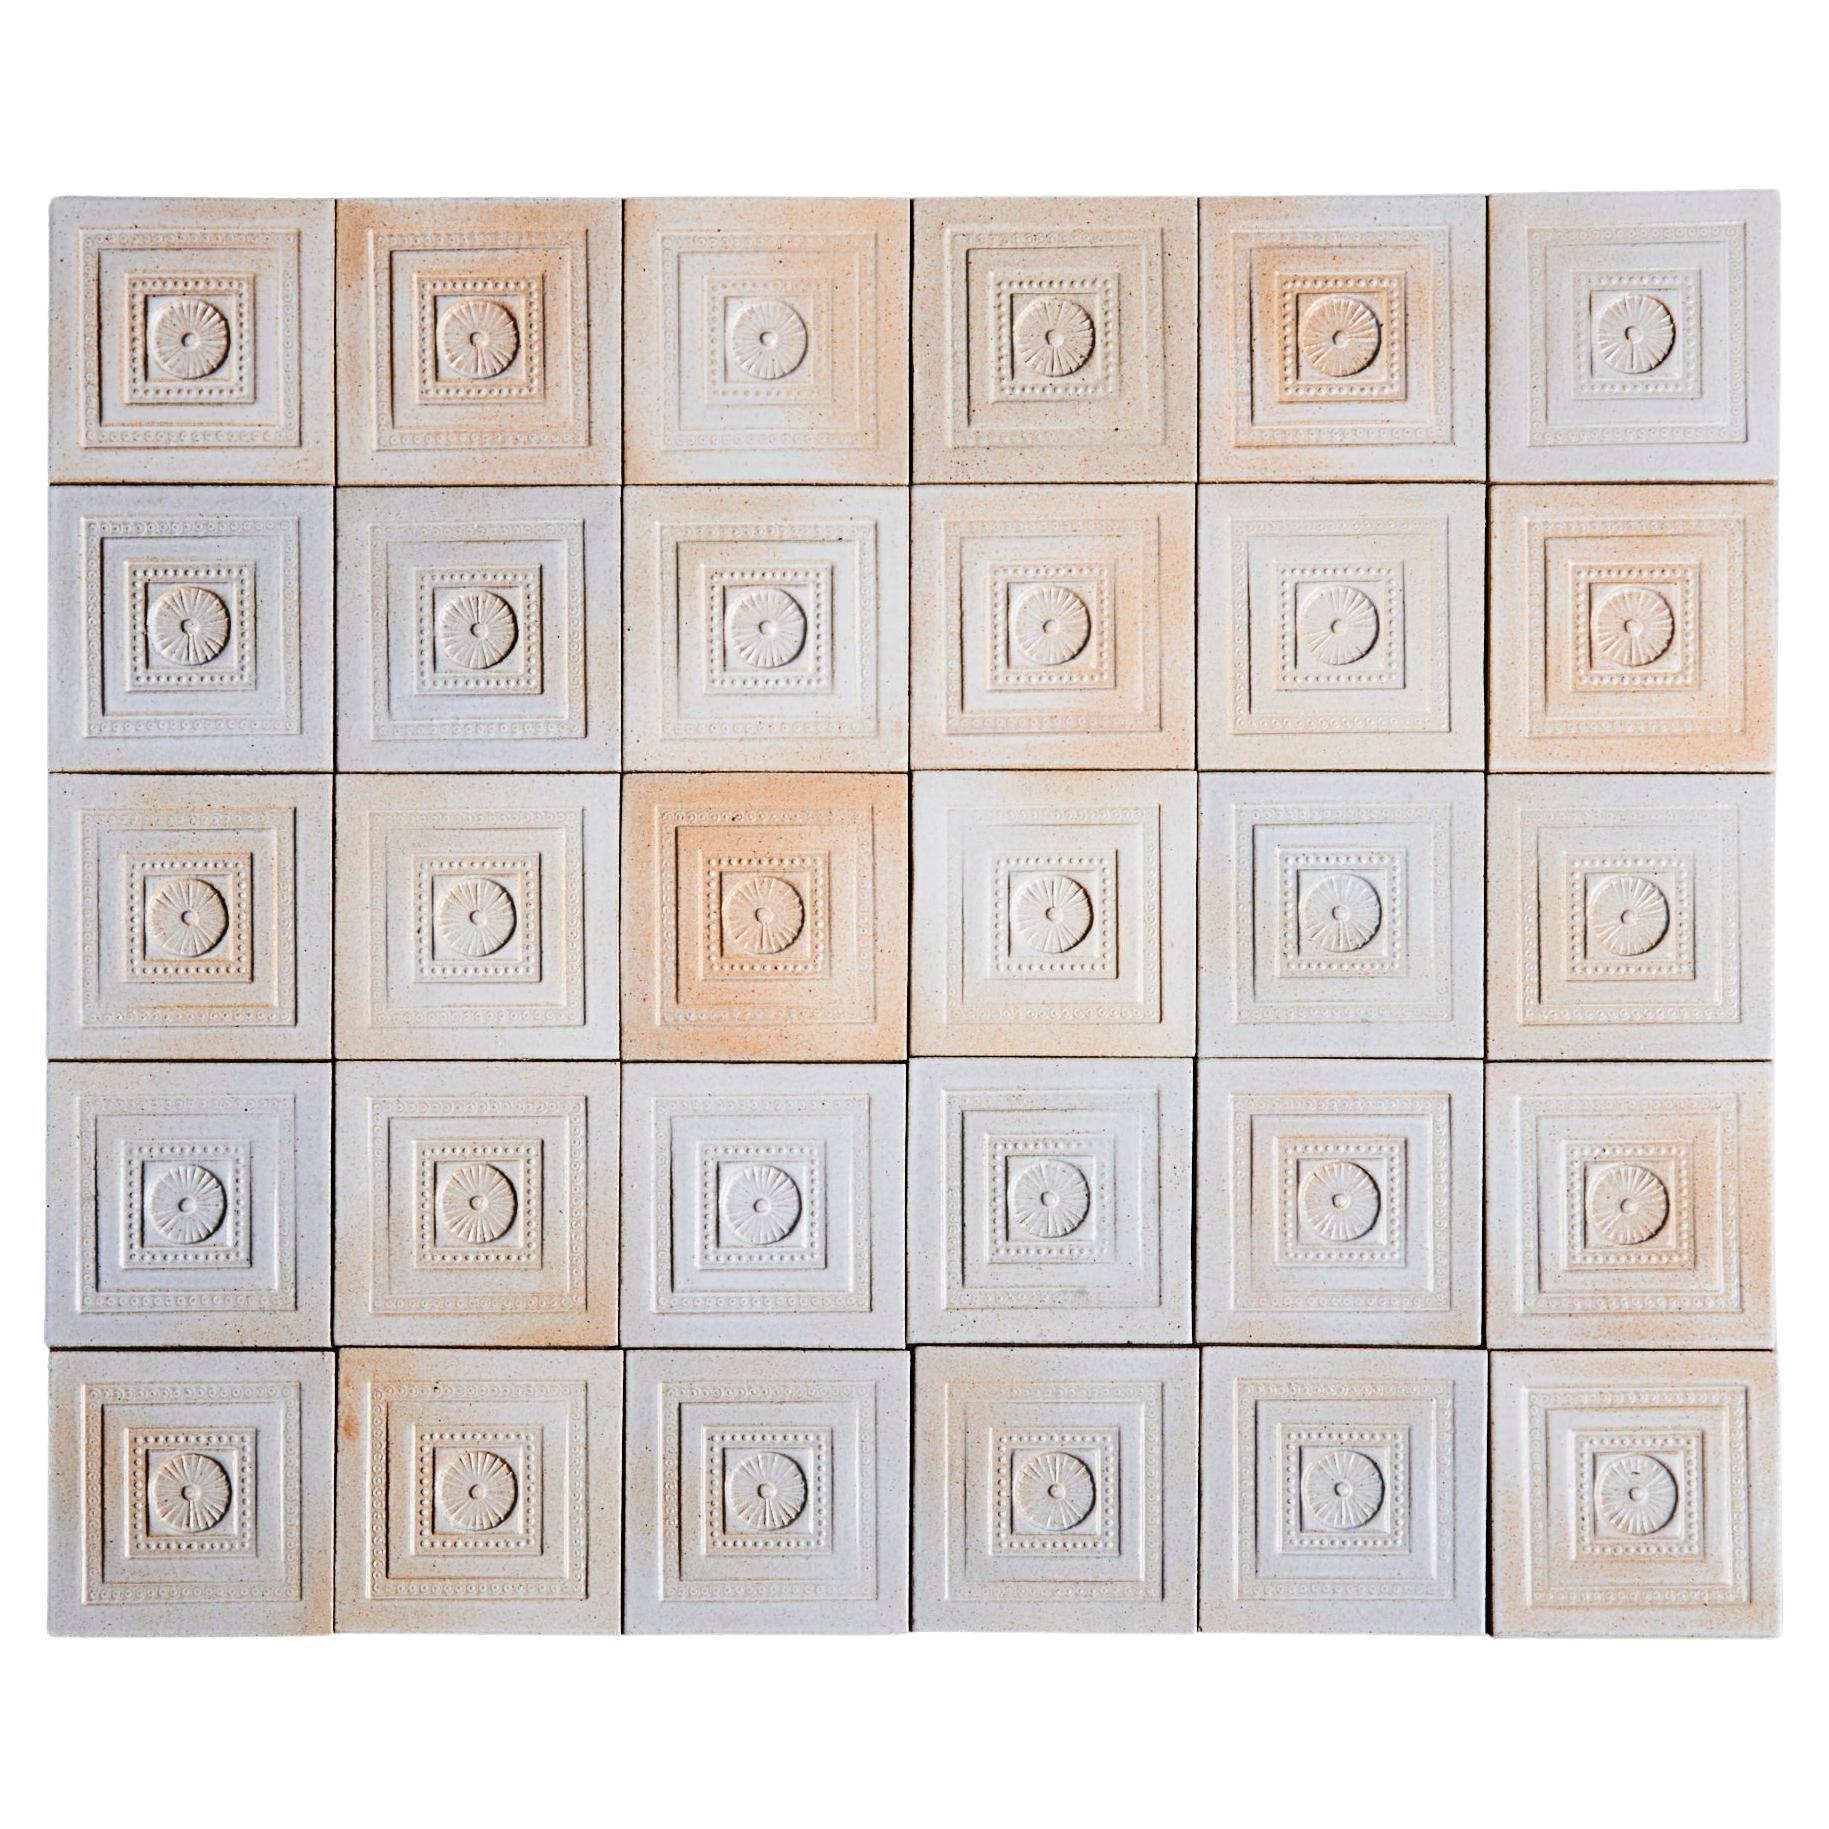 Set of 30 tiles by Roger Capron, France - 1970s. 